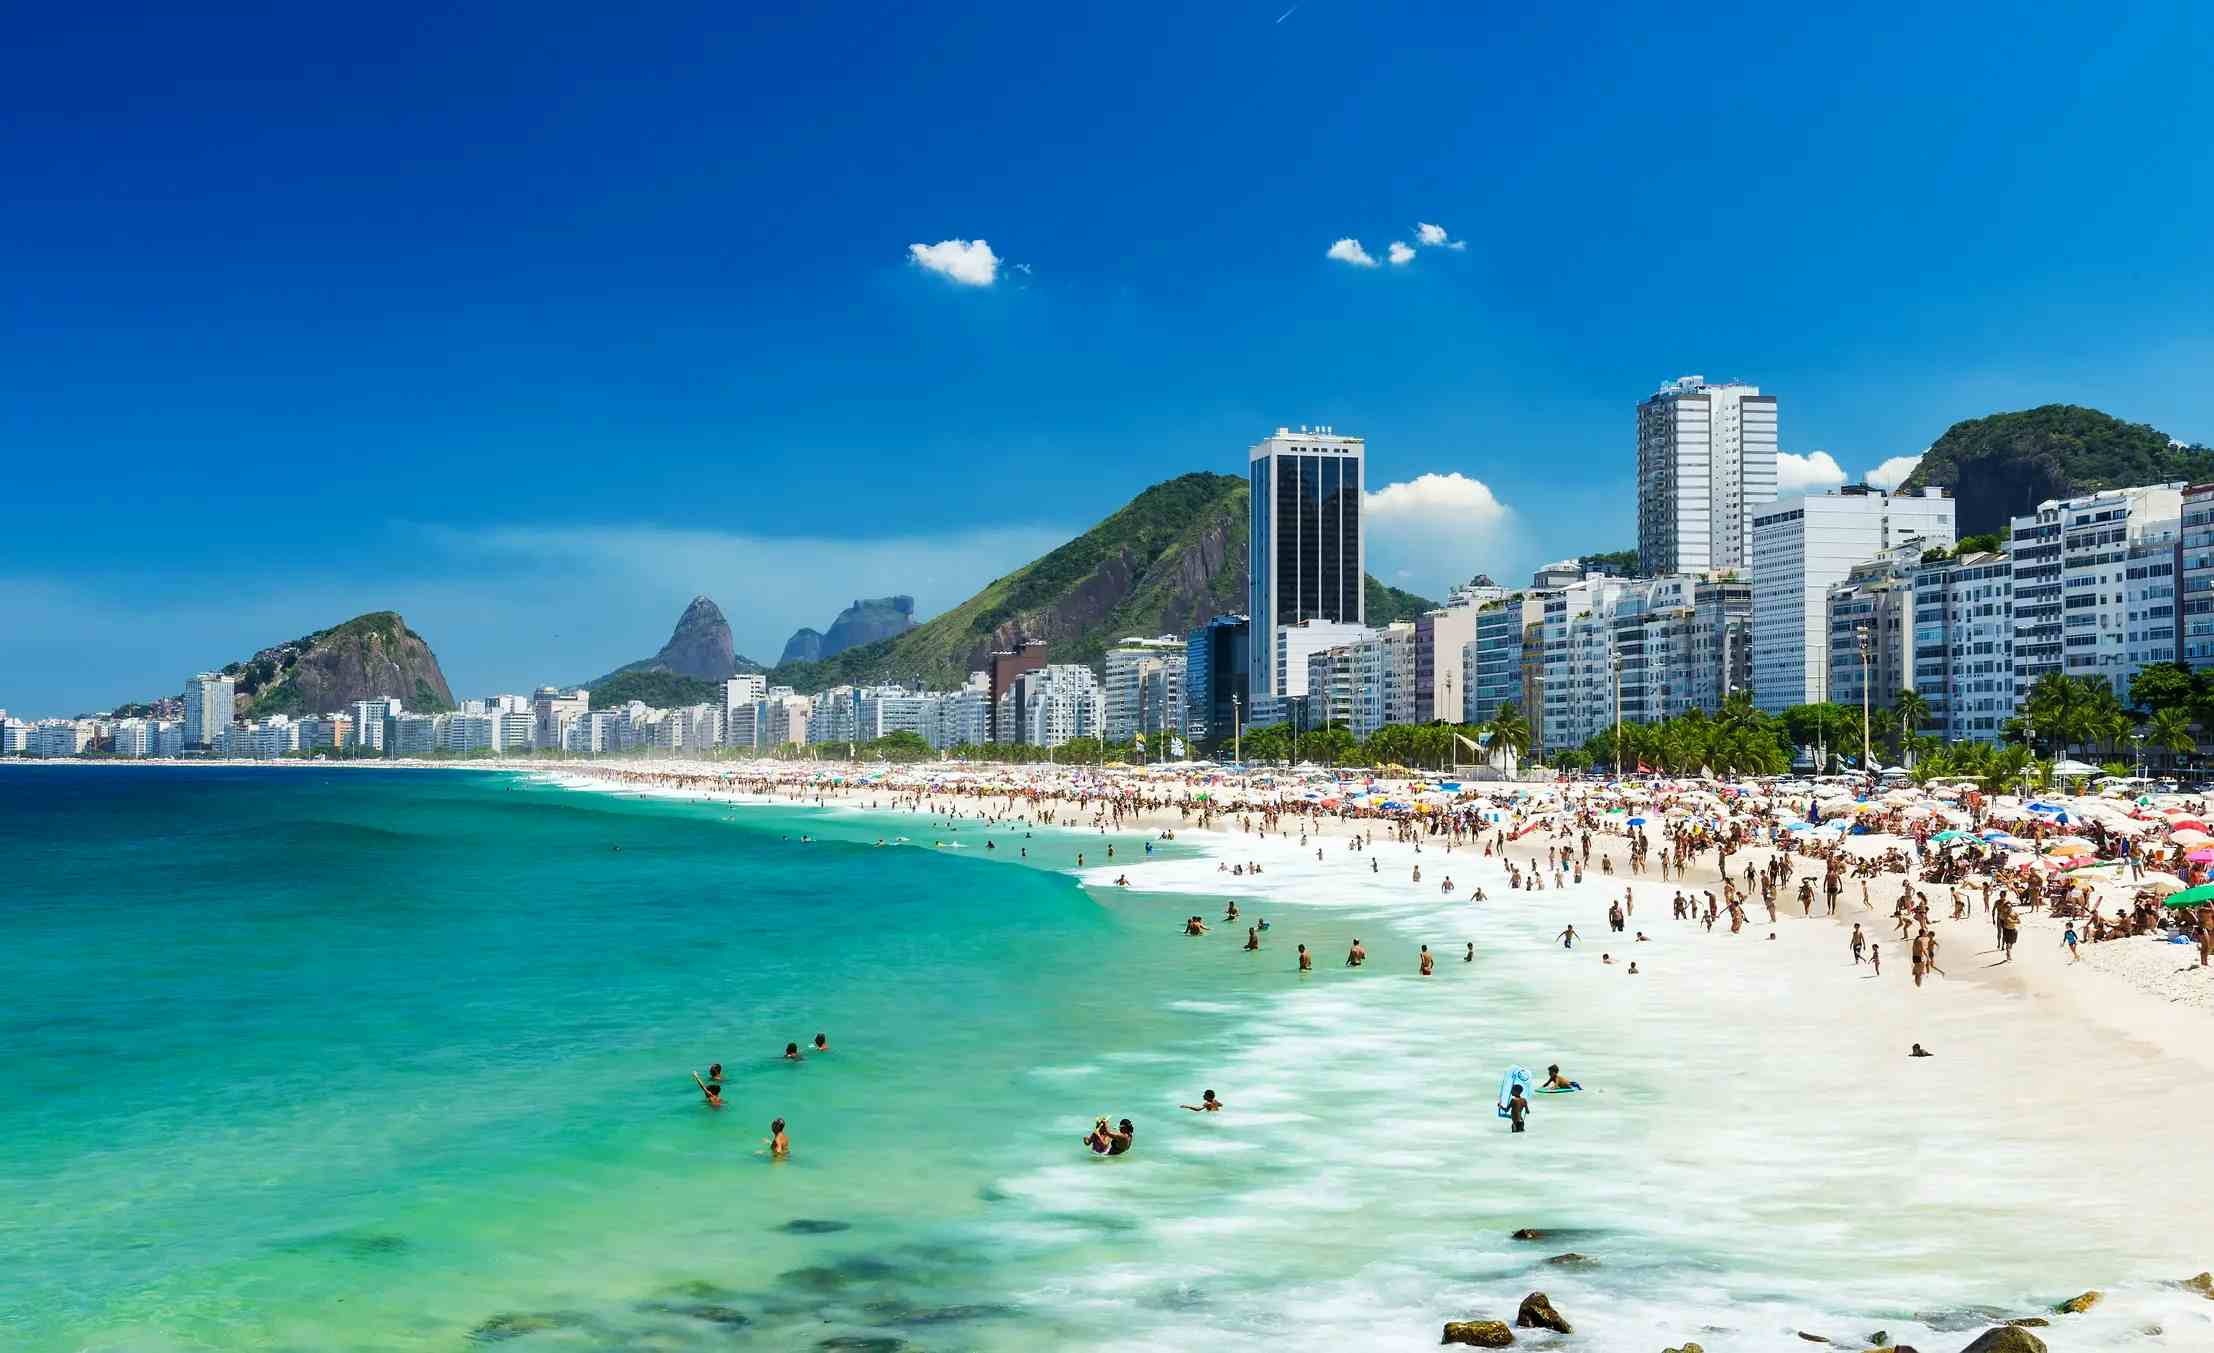 Plage de Copacabana image